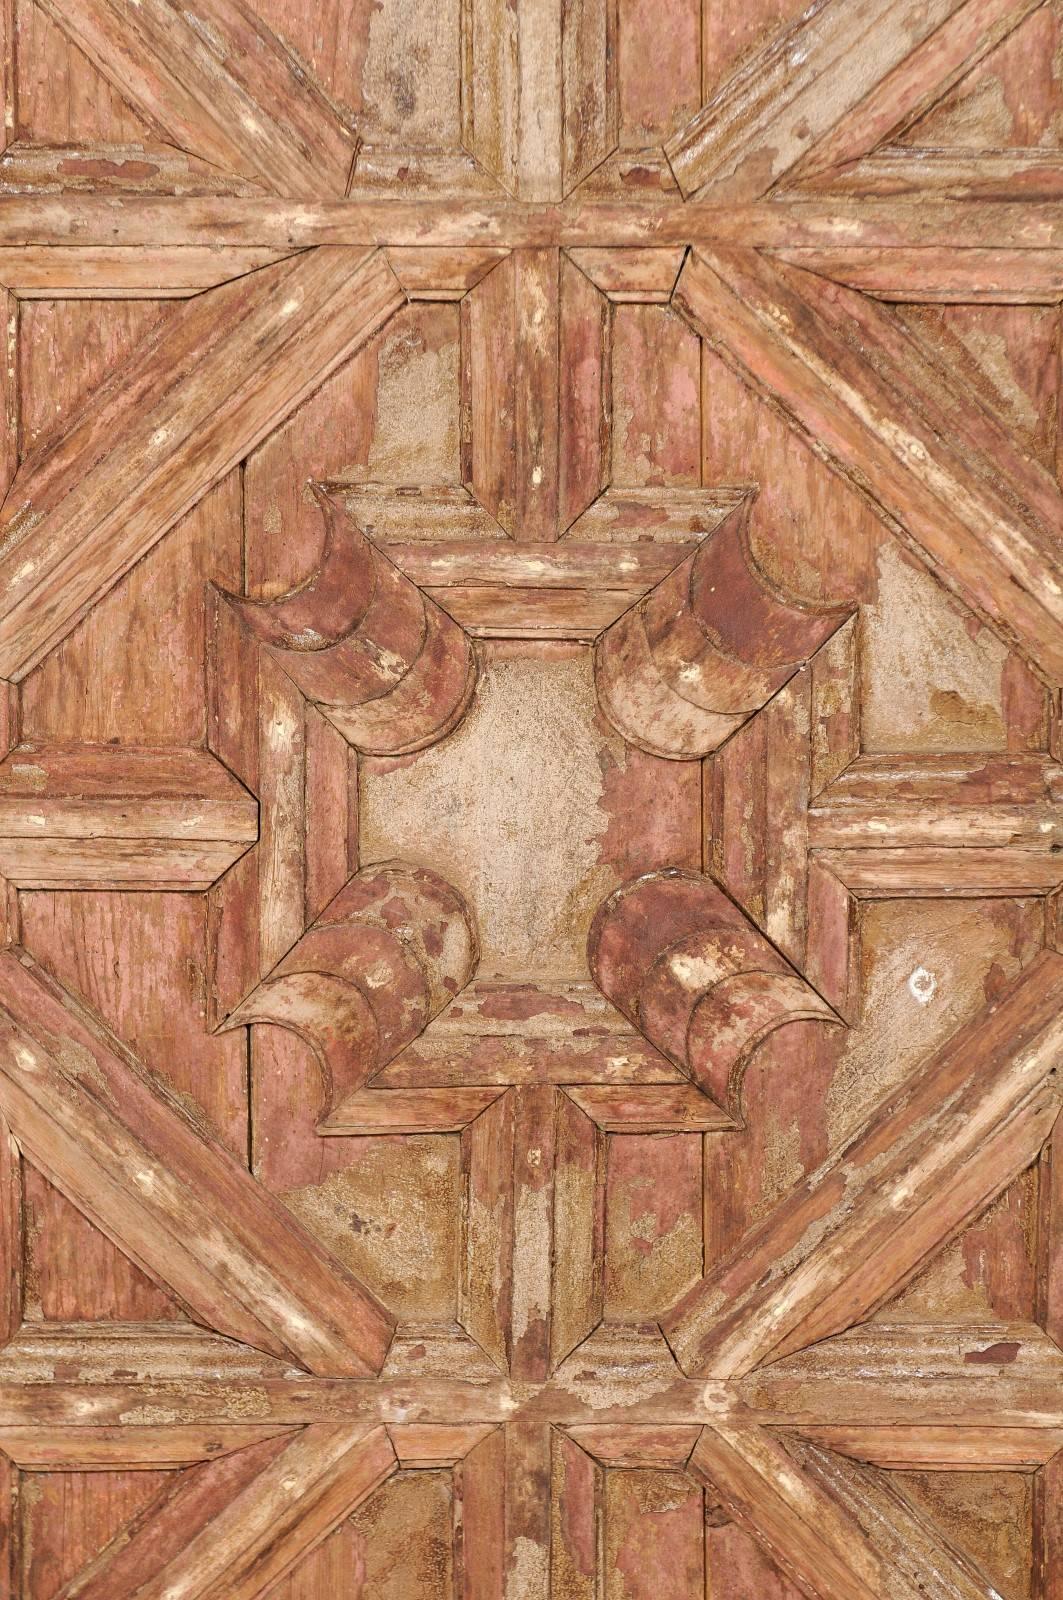 Rustic Pair of 18th Century Spanish Wood Doors with Original Finish